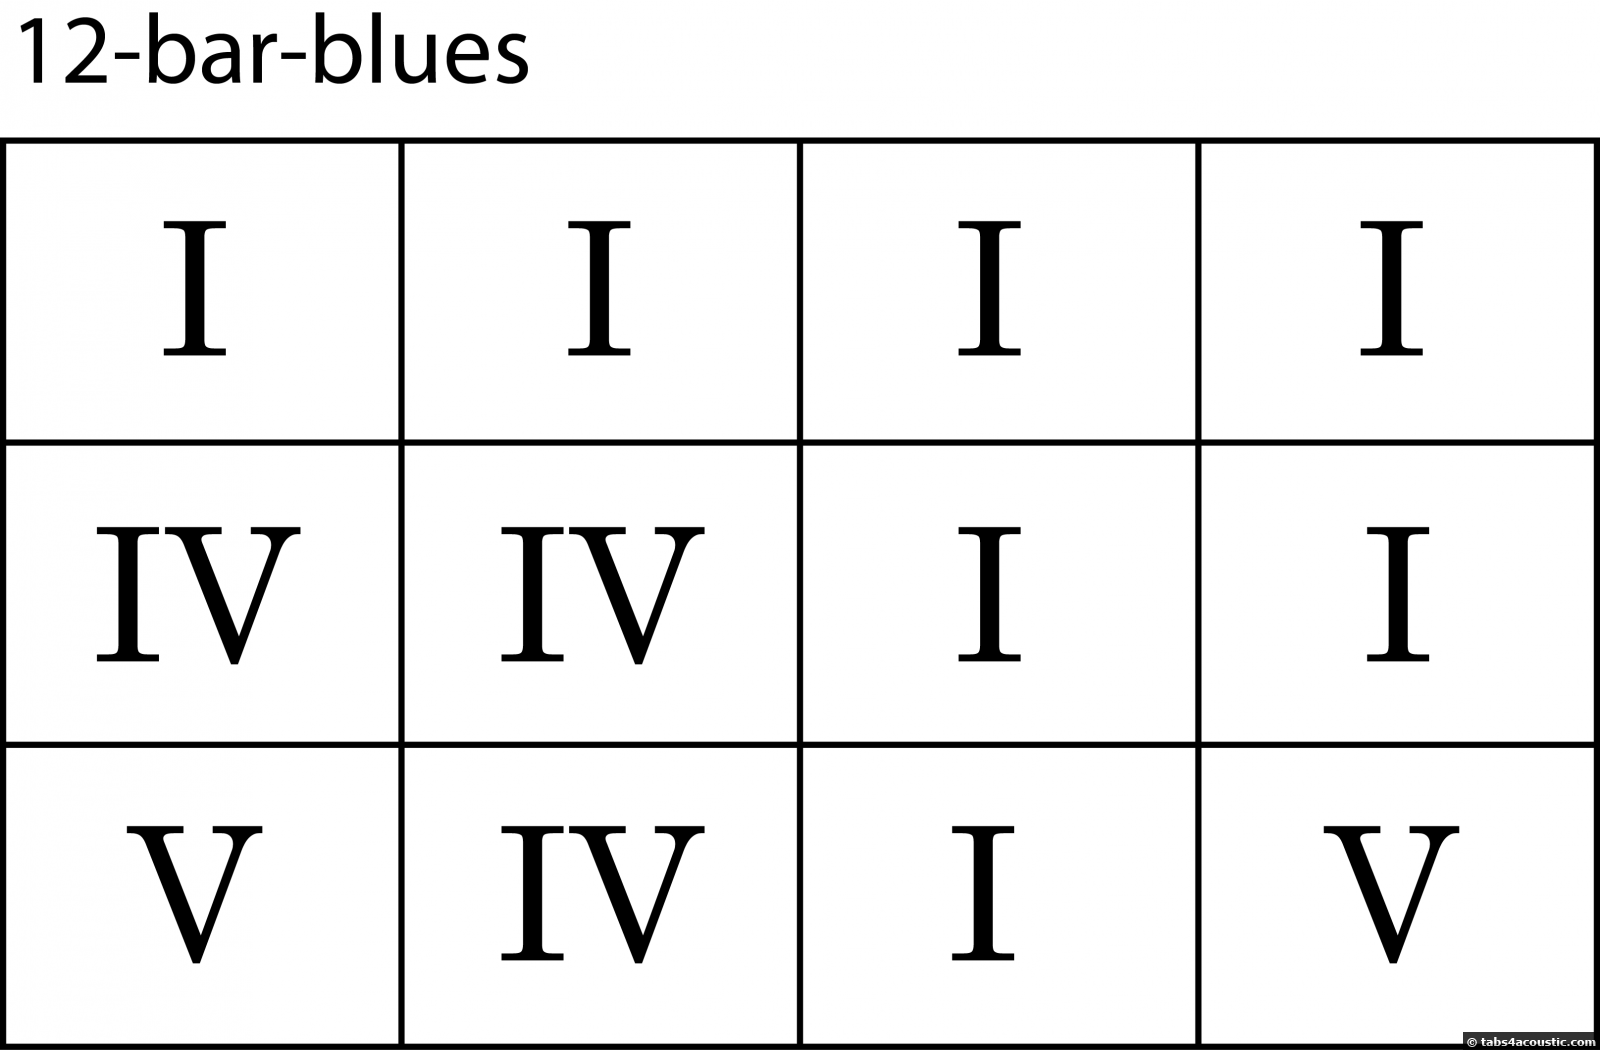 12-bar-blues progression